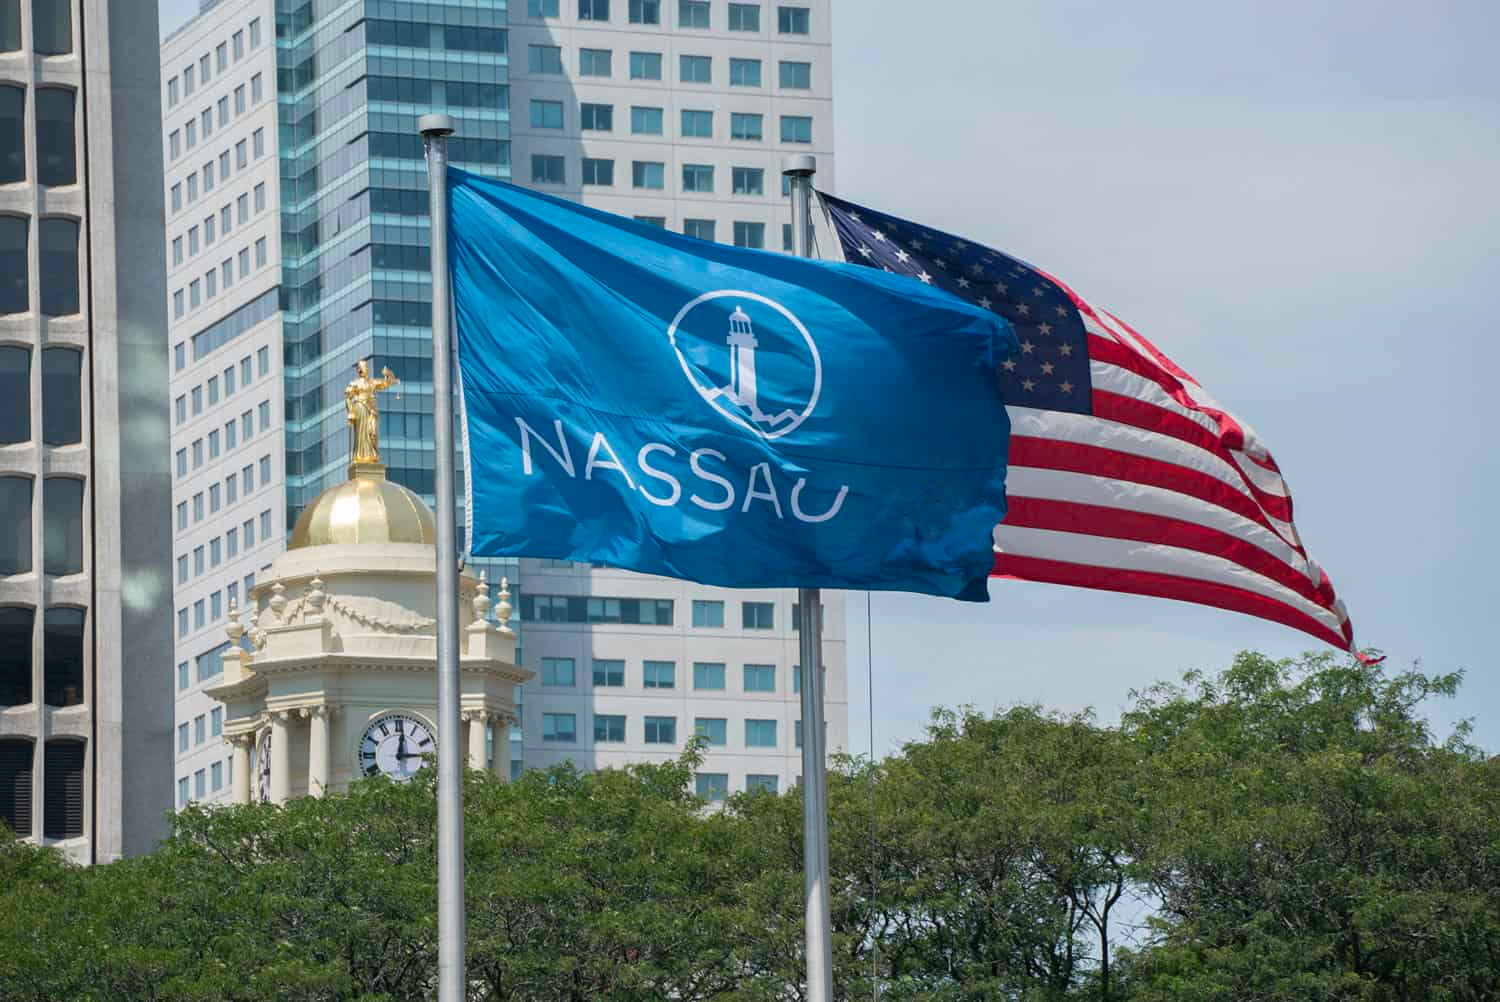 photo of nassau re flag